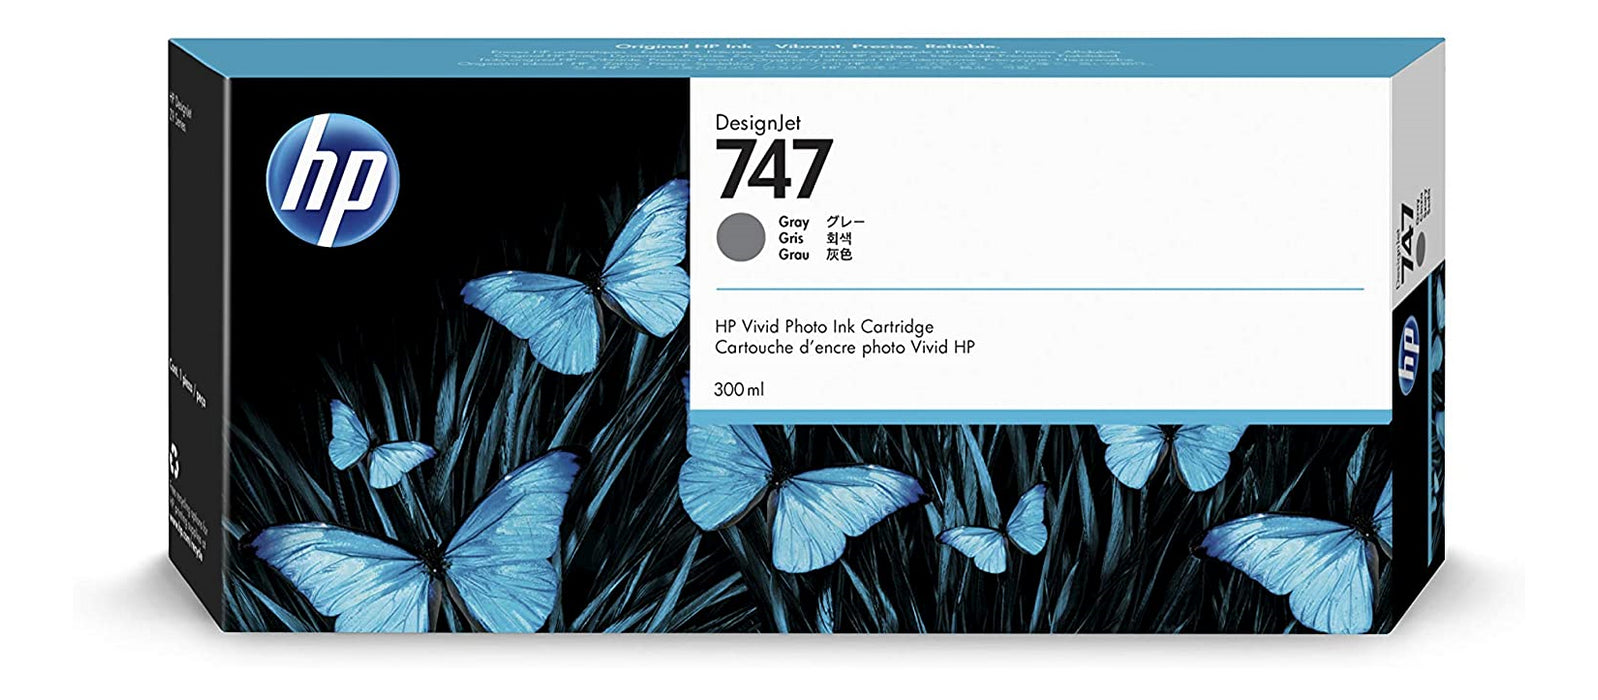 P2V86A HP #747 300 ml Gray Ink Crtg